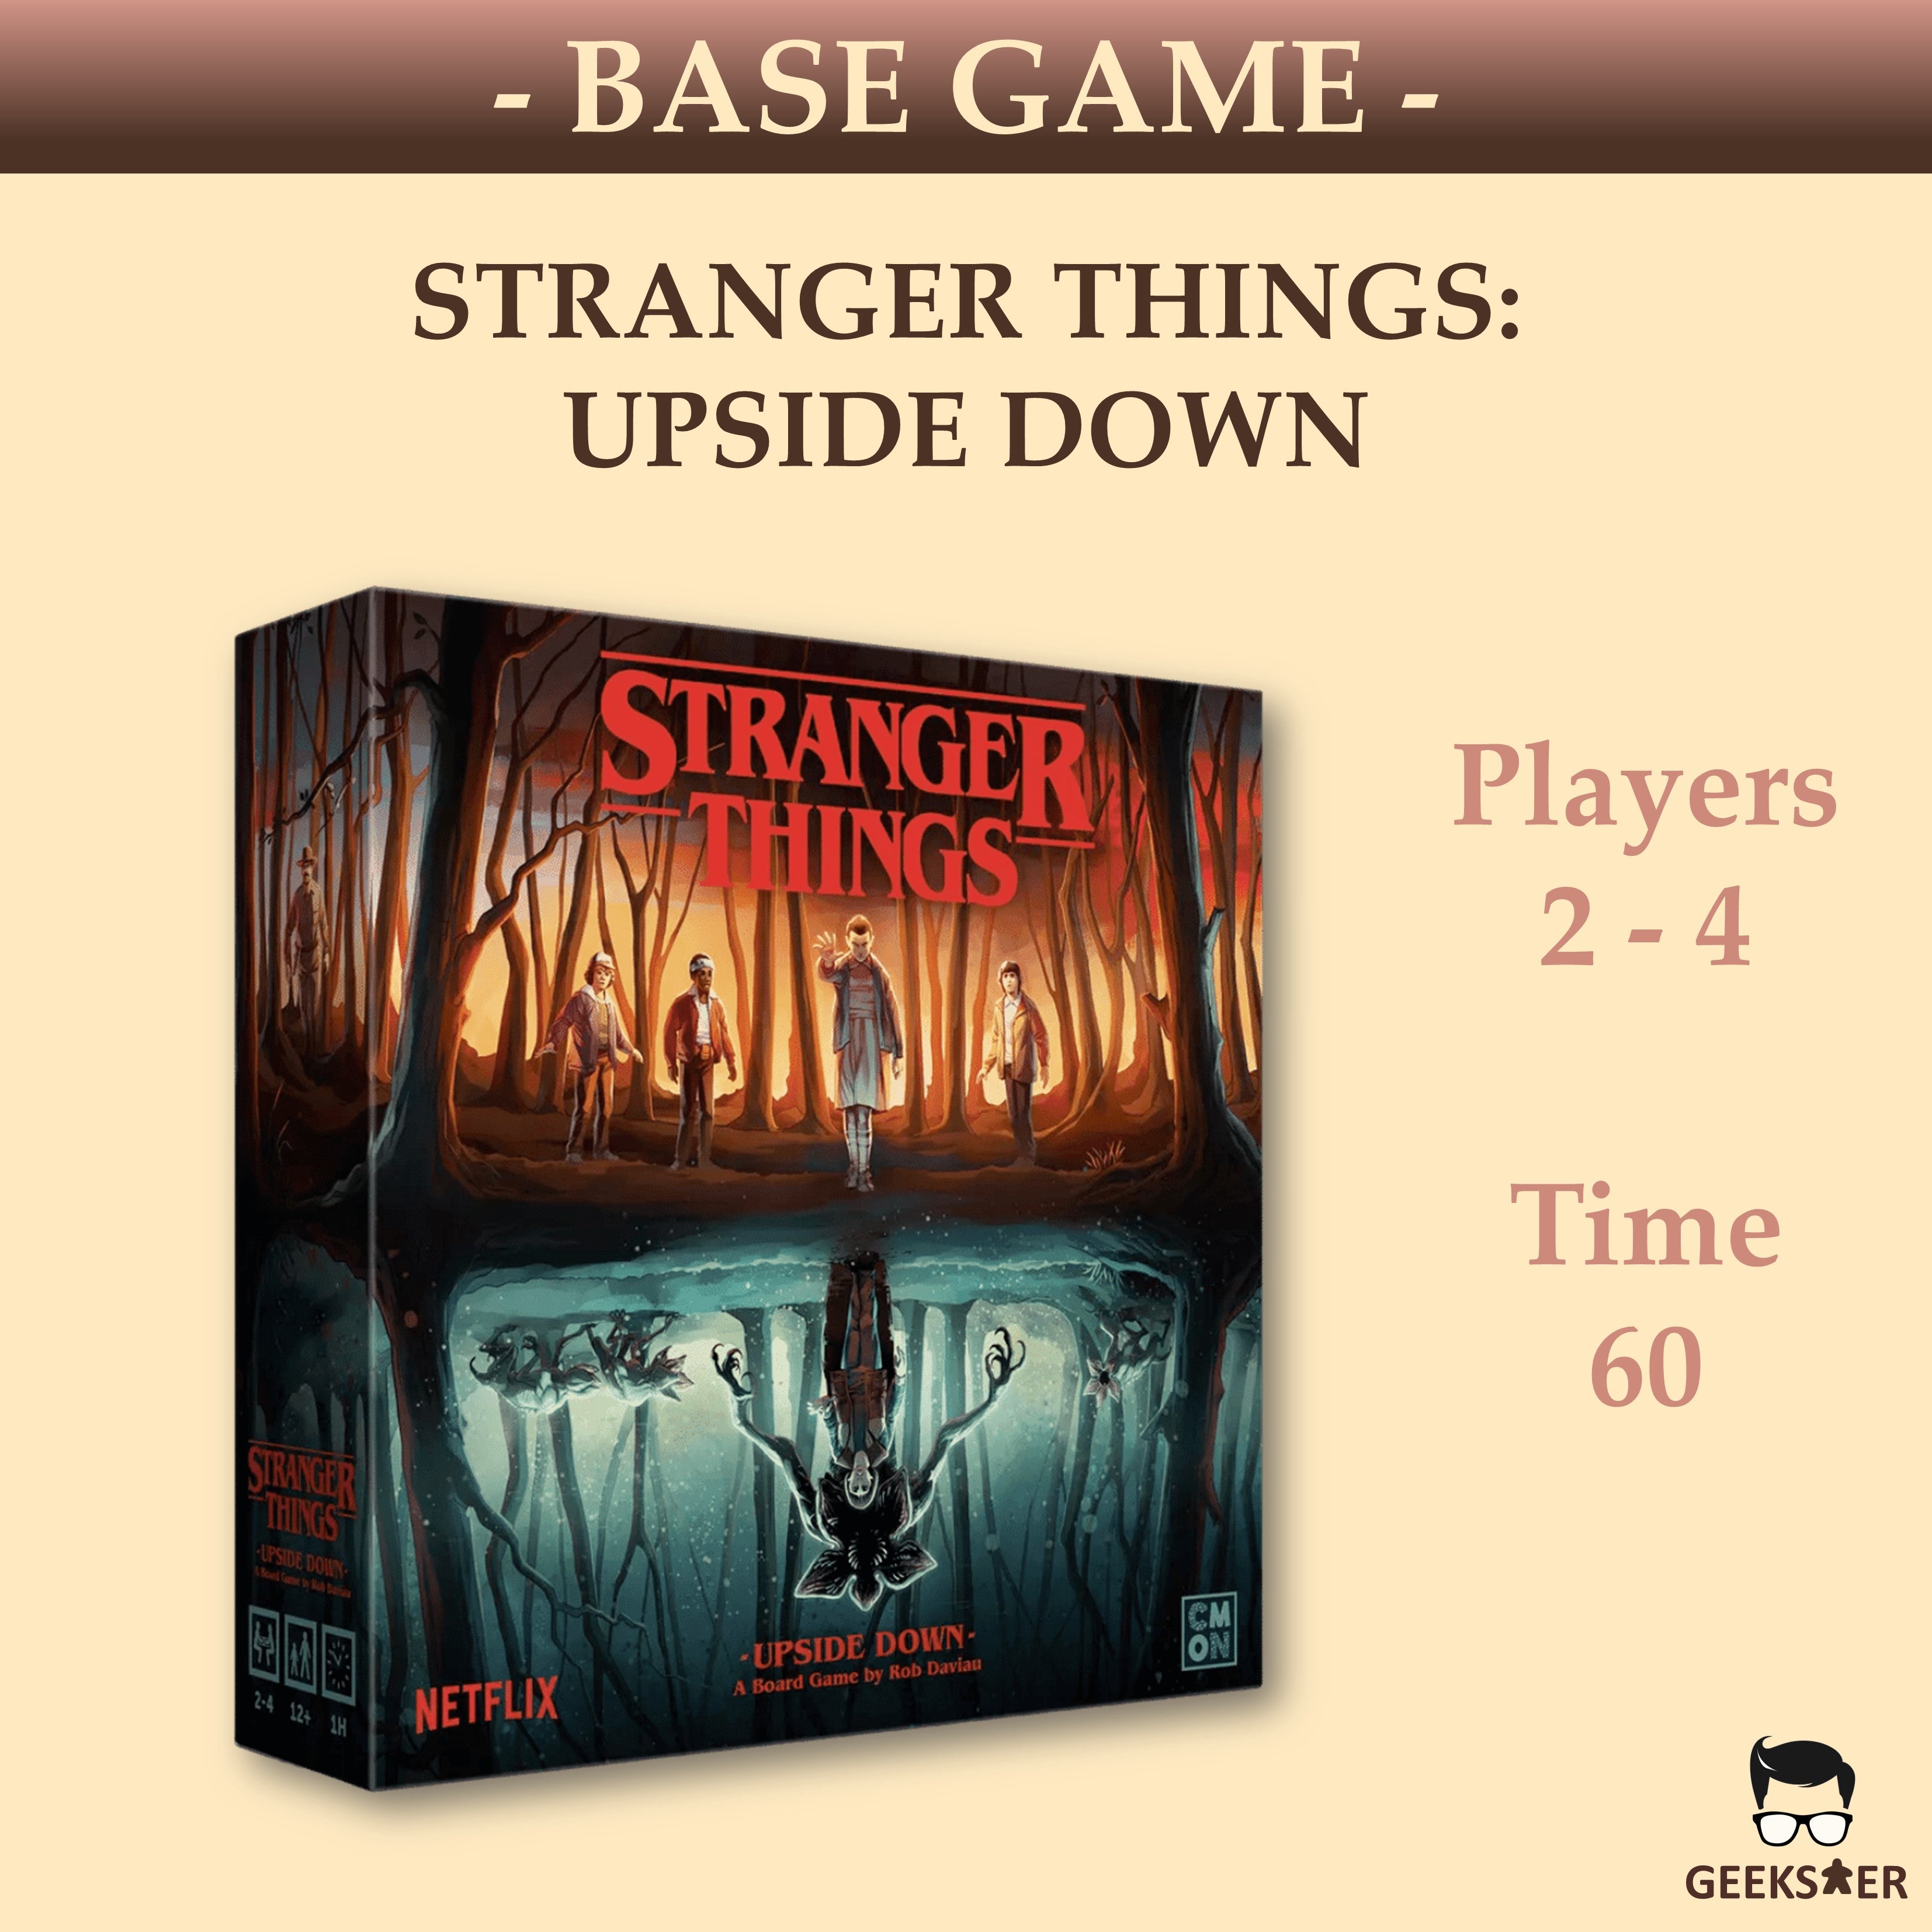 Stranger Things: Upside Down, Board Game